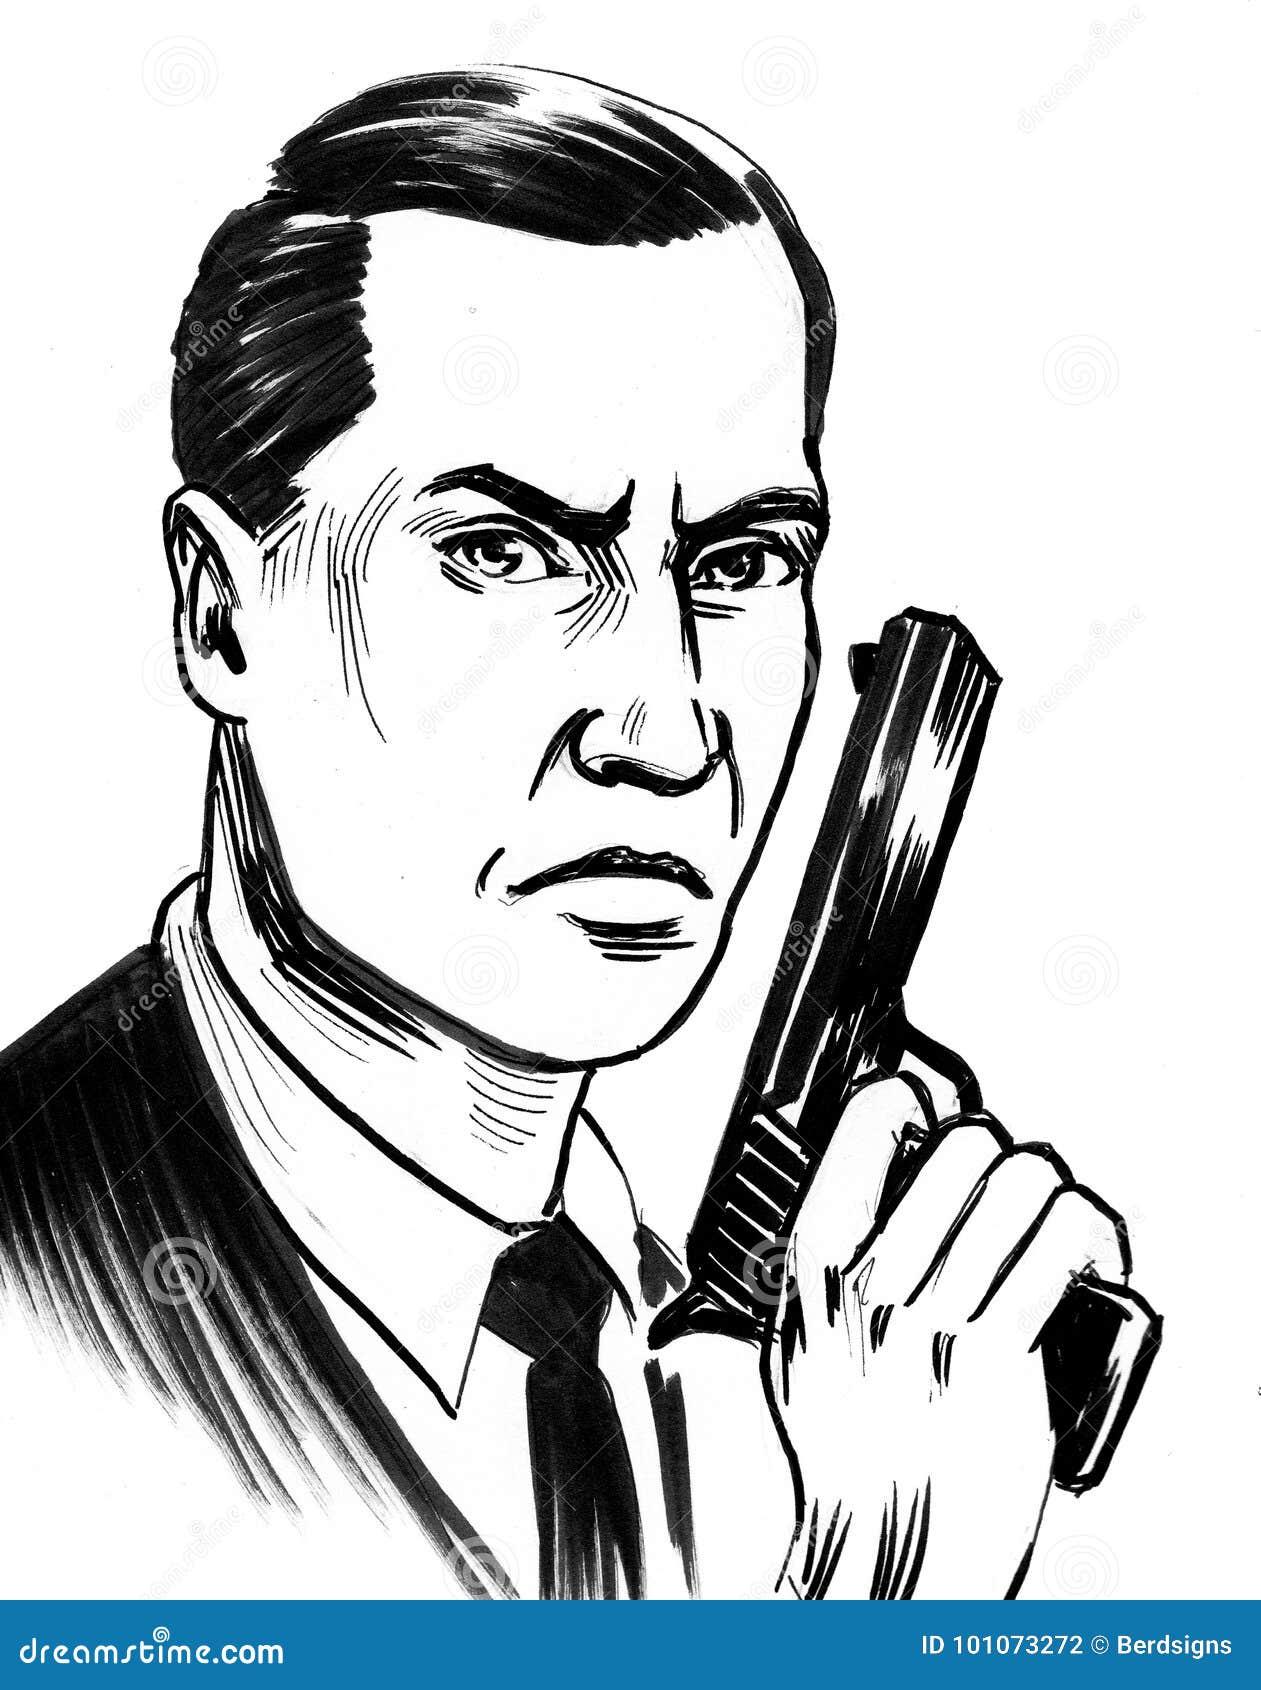 Spy with a guy stock illustration. Illustration of sketch 101073272